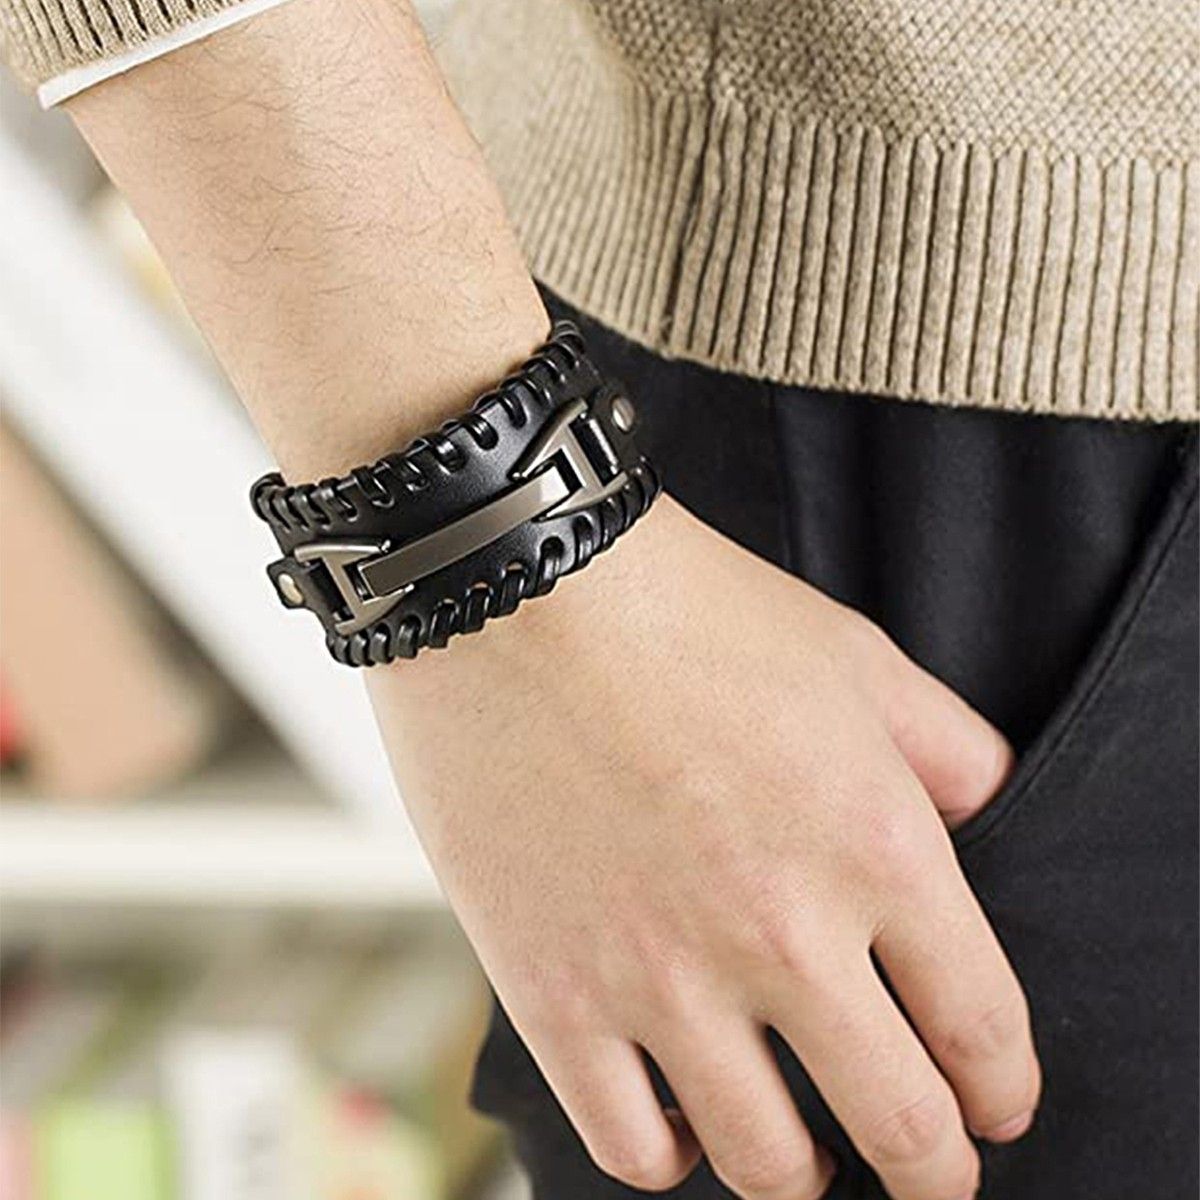 New Triple and Double Studded Punk Rock Wristband Bracelets Black   Walmartcom